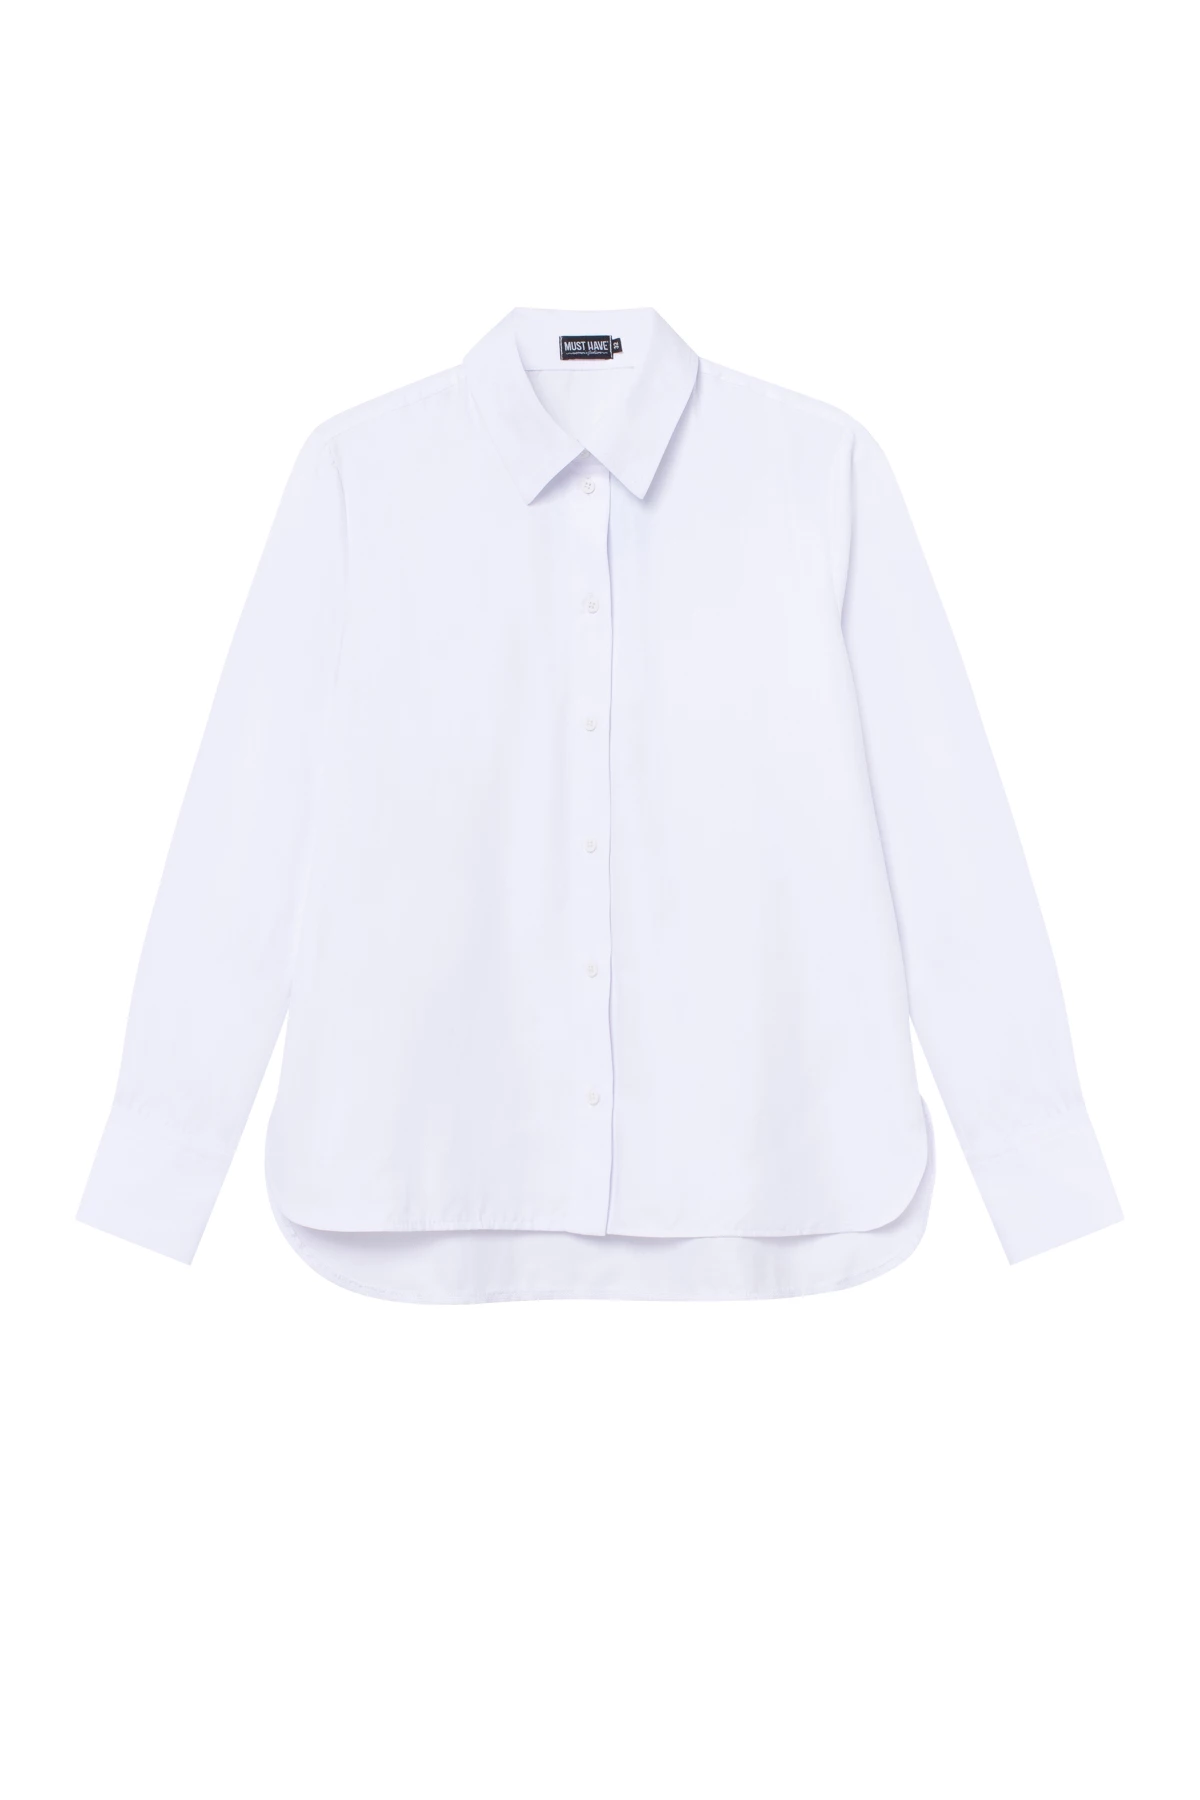 Basic white cuffed shirt, photo 6